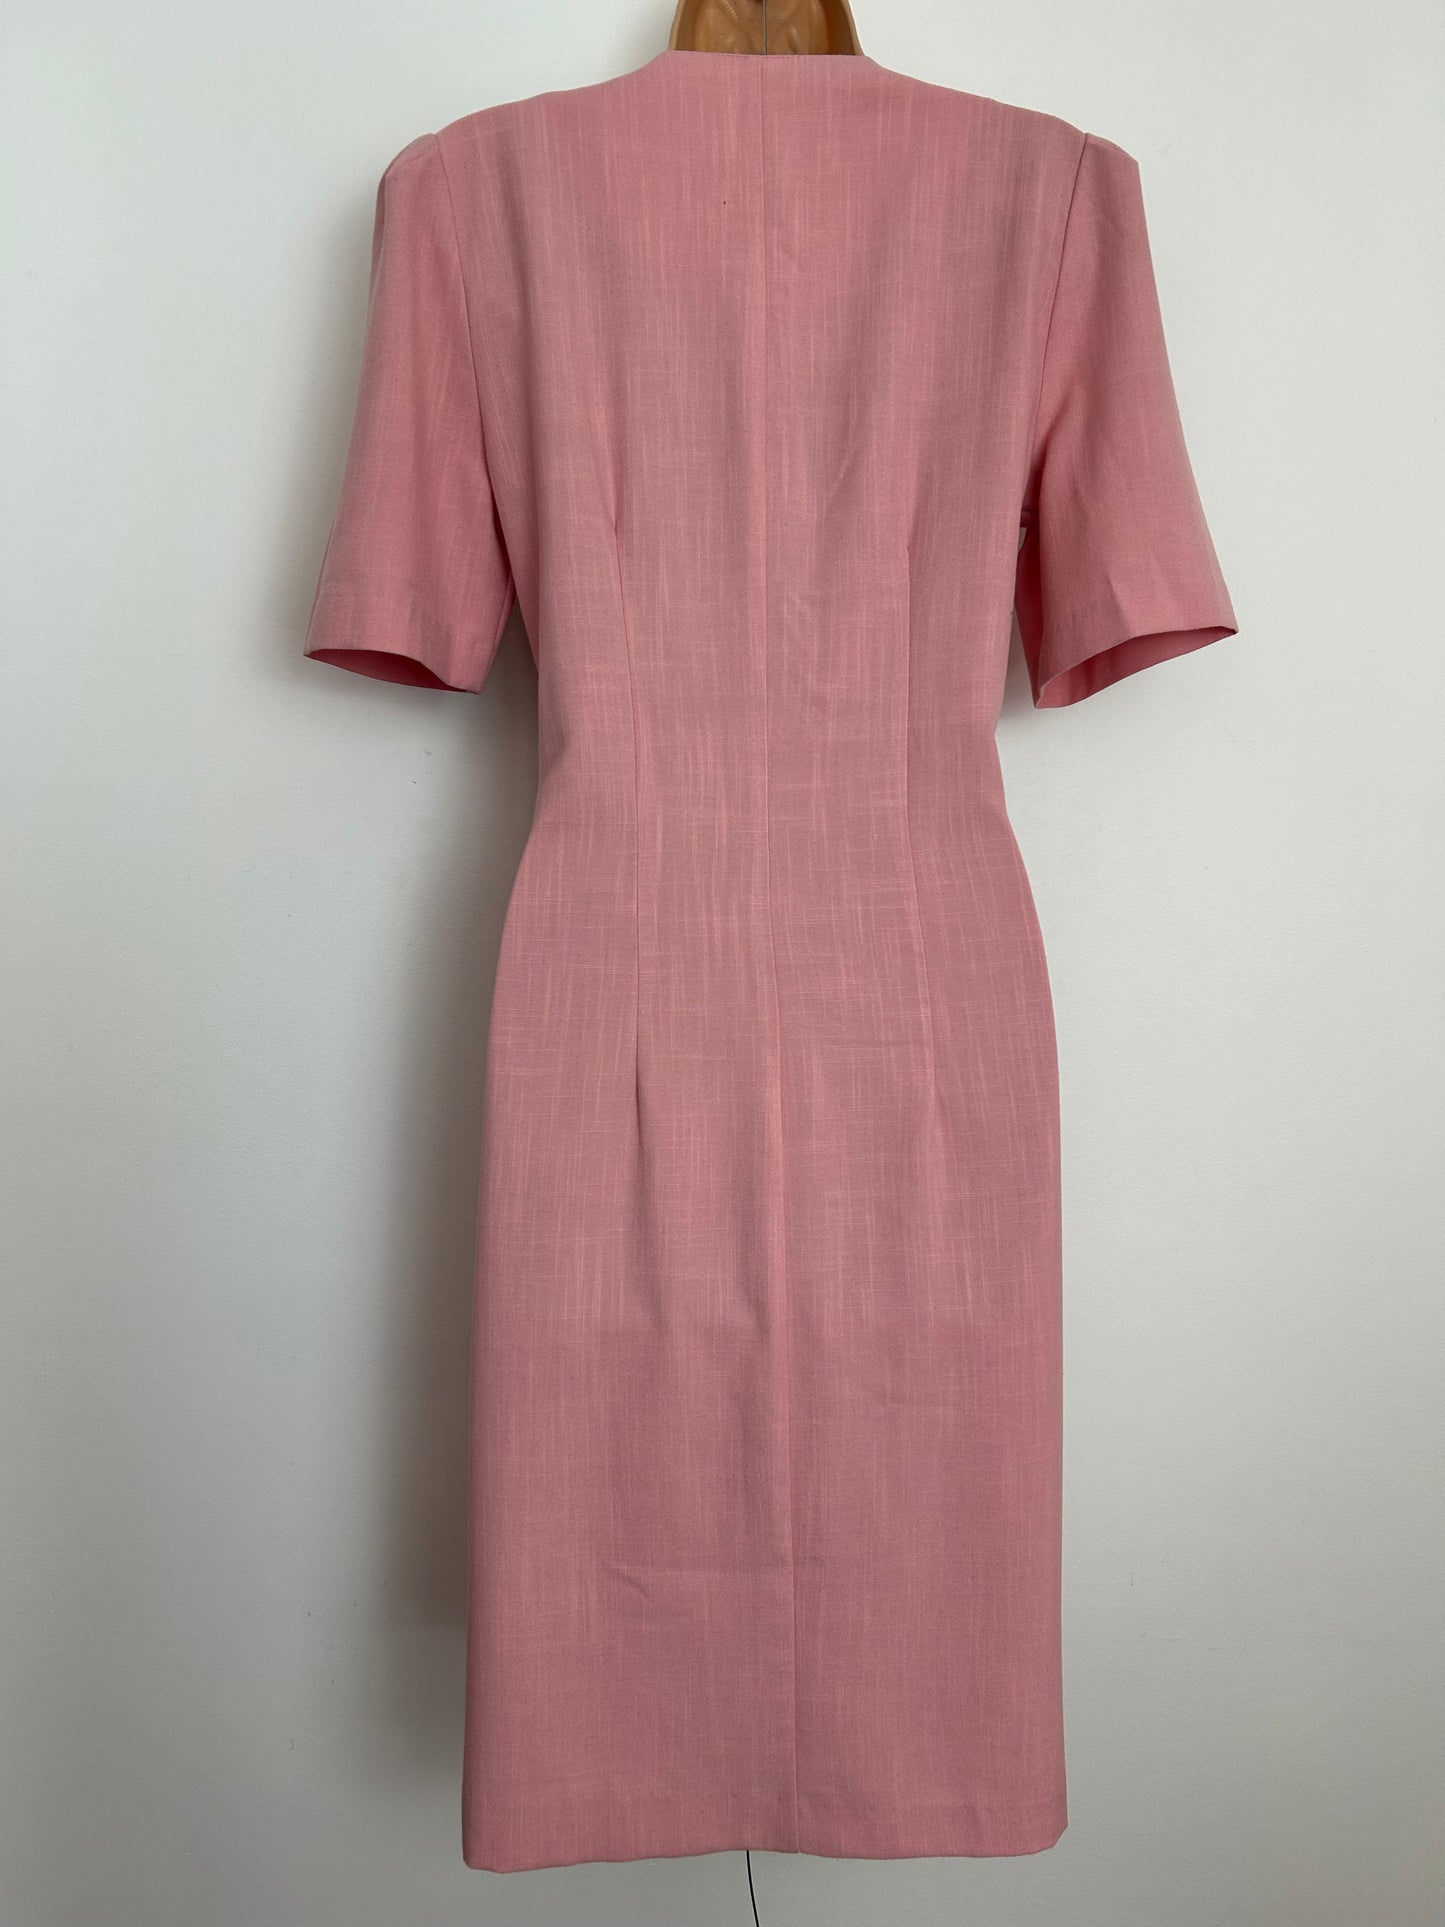 Vintage 1980s SHUBETTE UK Size 10 Pink Short Sleeve Straight Fitting Wrap Dress